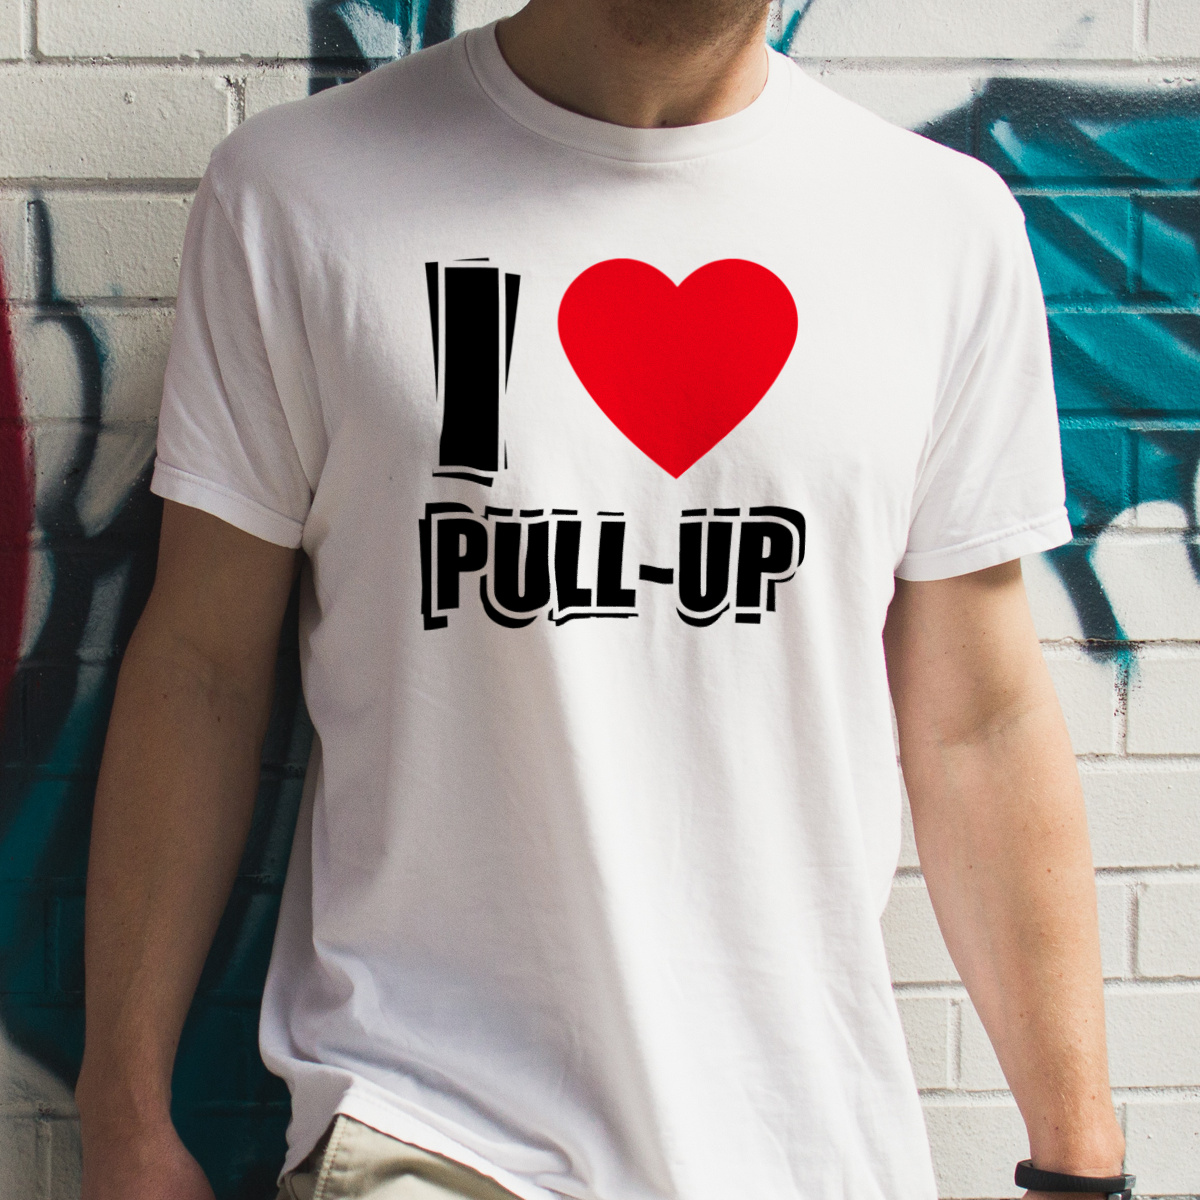 I Love Pull-Up - Męska Koszulka Biała